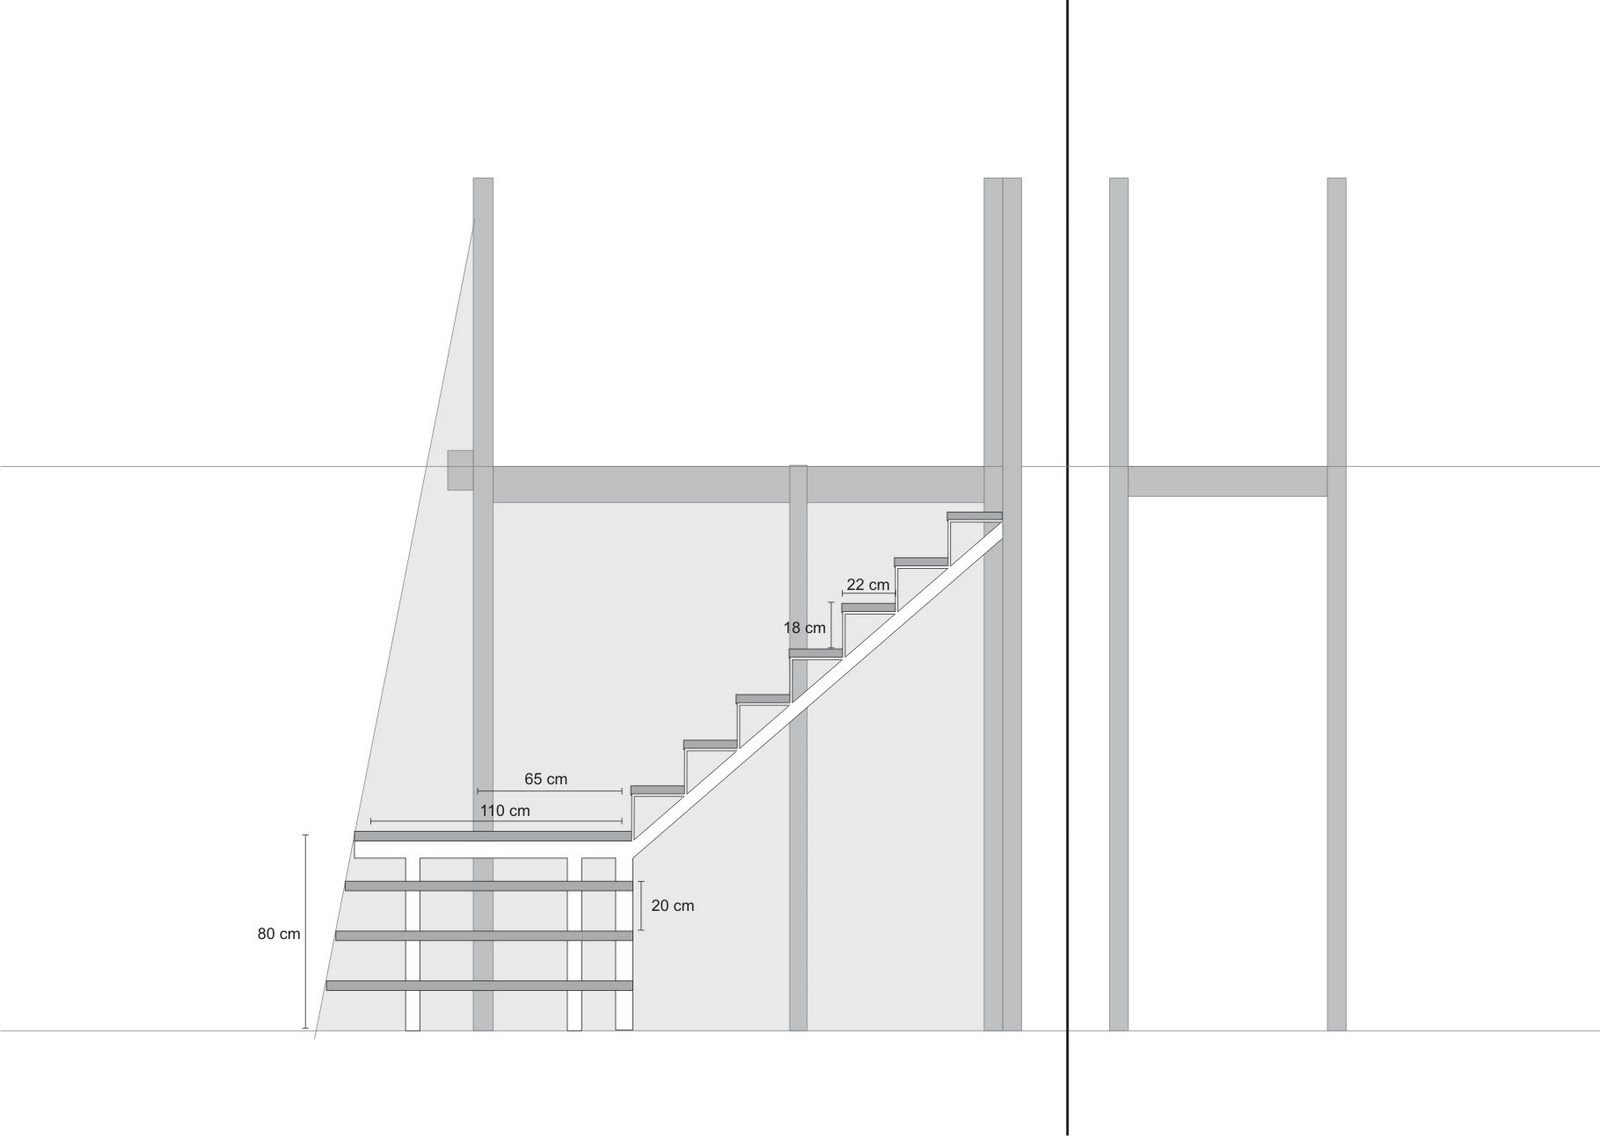 casita: pensar una escalera